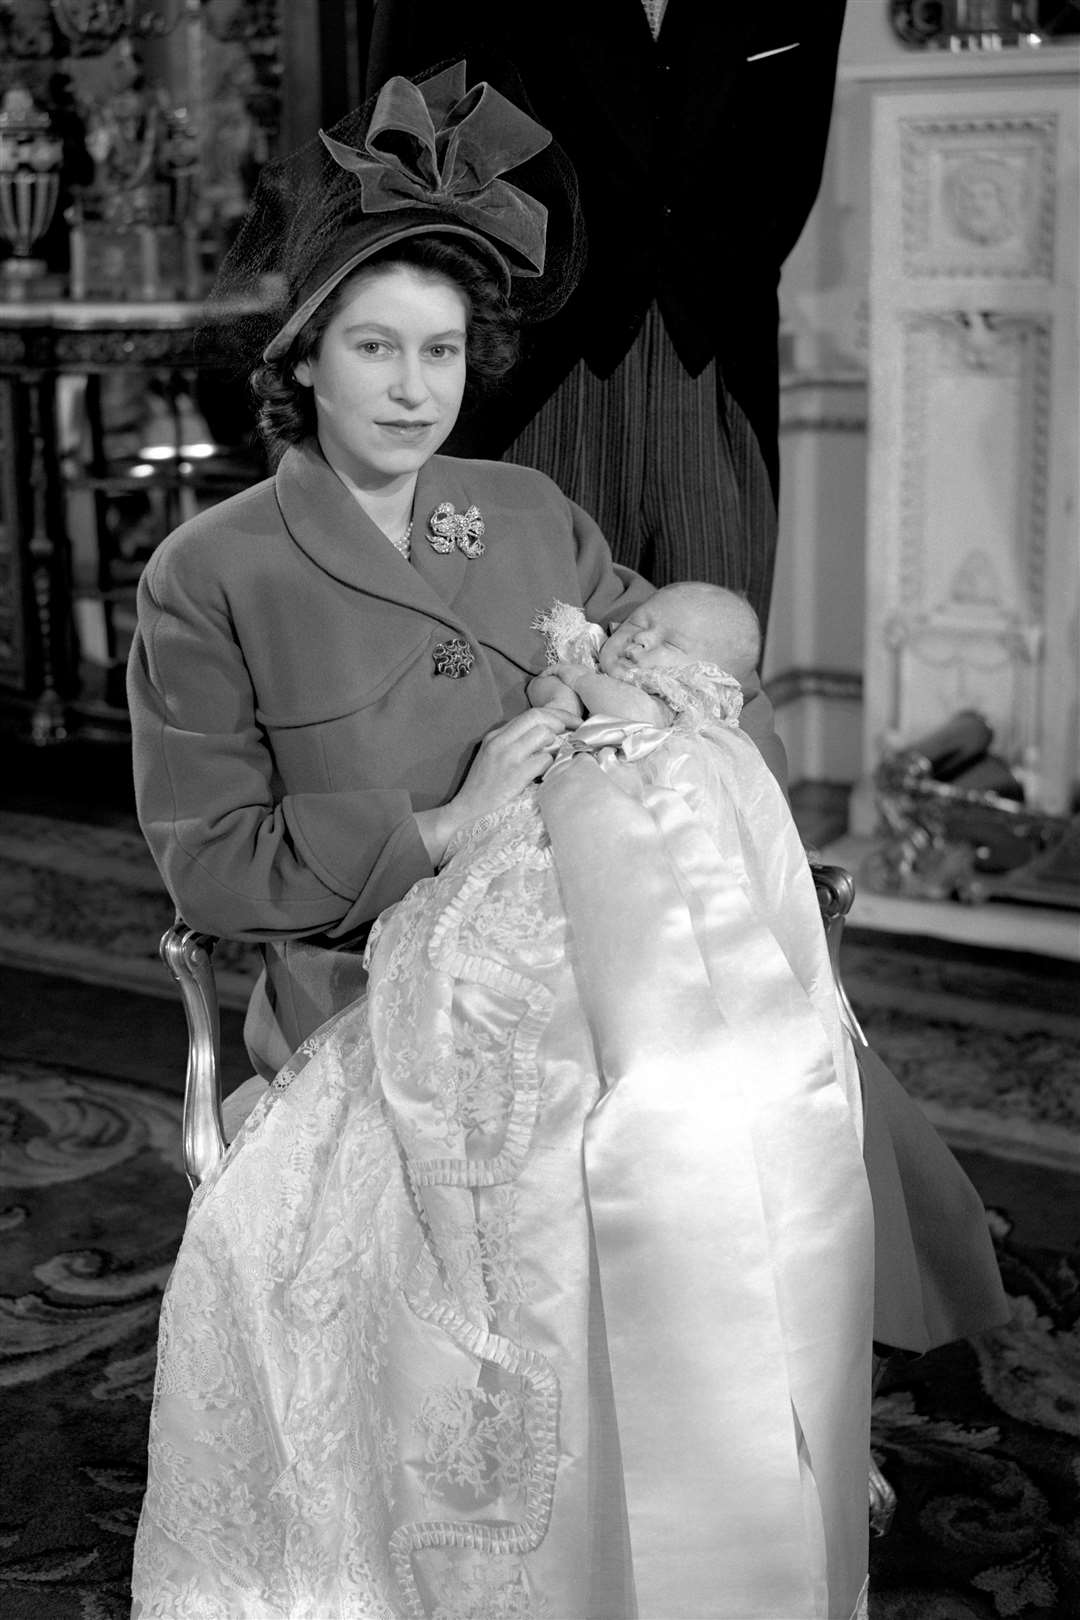 Princess Elizabeth holding her infant son Prince Charles in 1948 (PA)